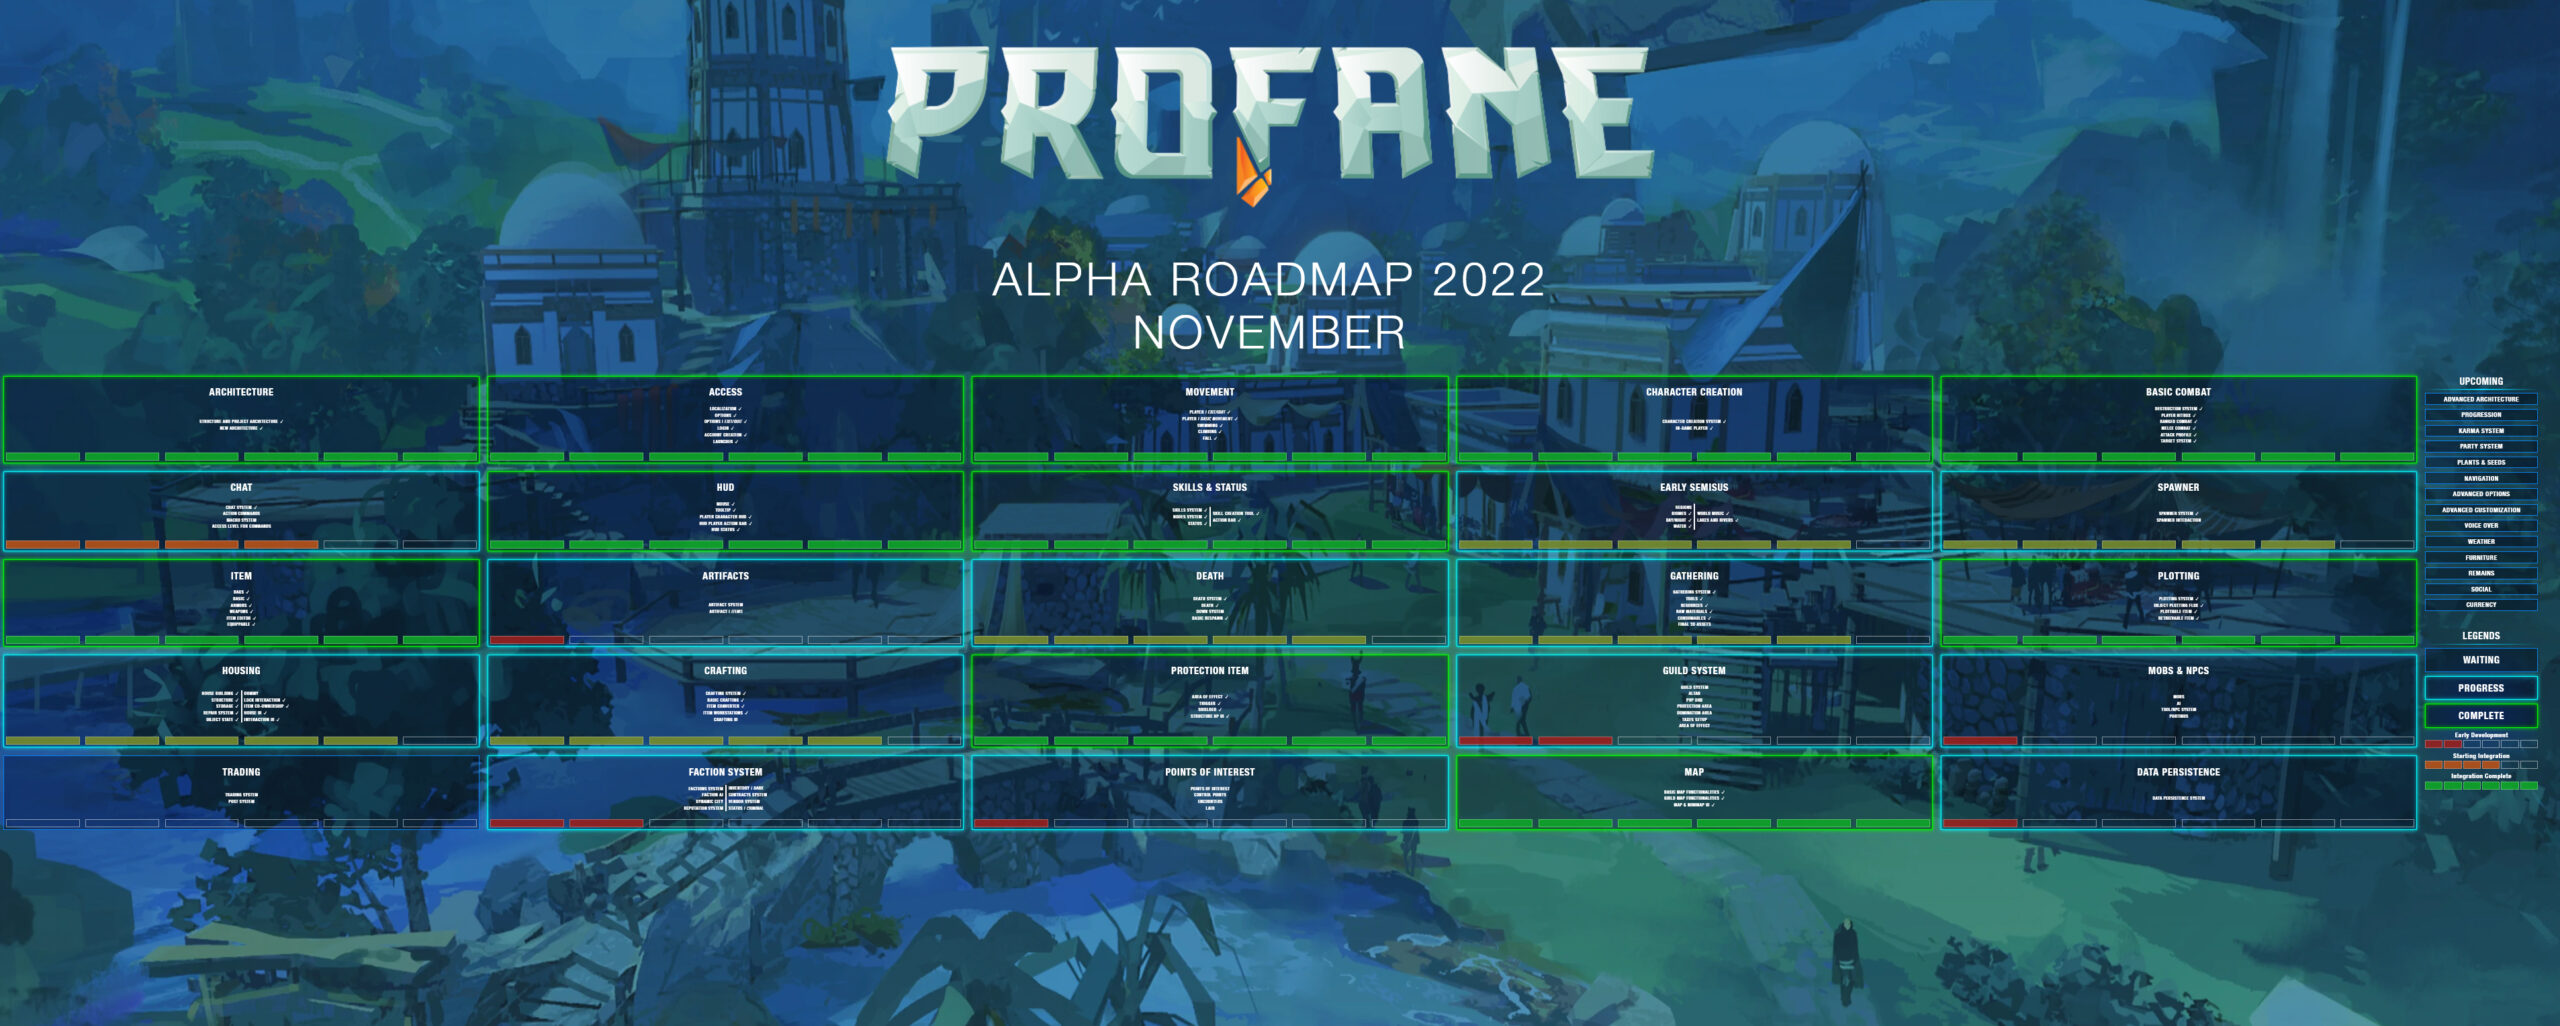 Profane Posts November Roadmap Showing Progress to Several Systems